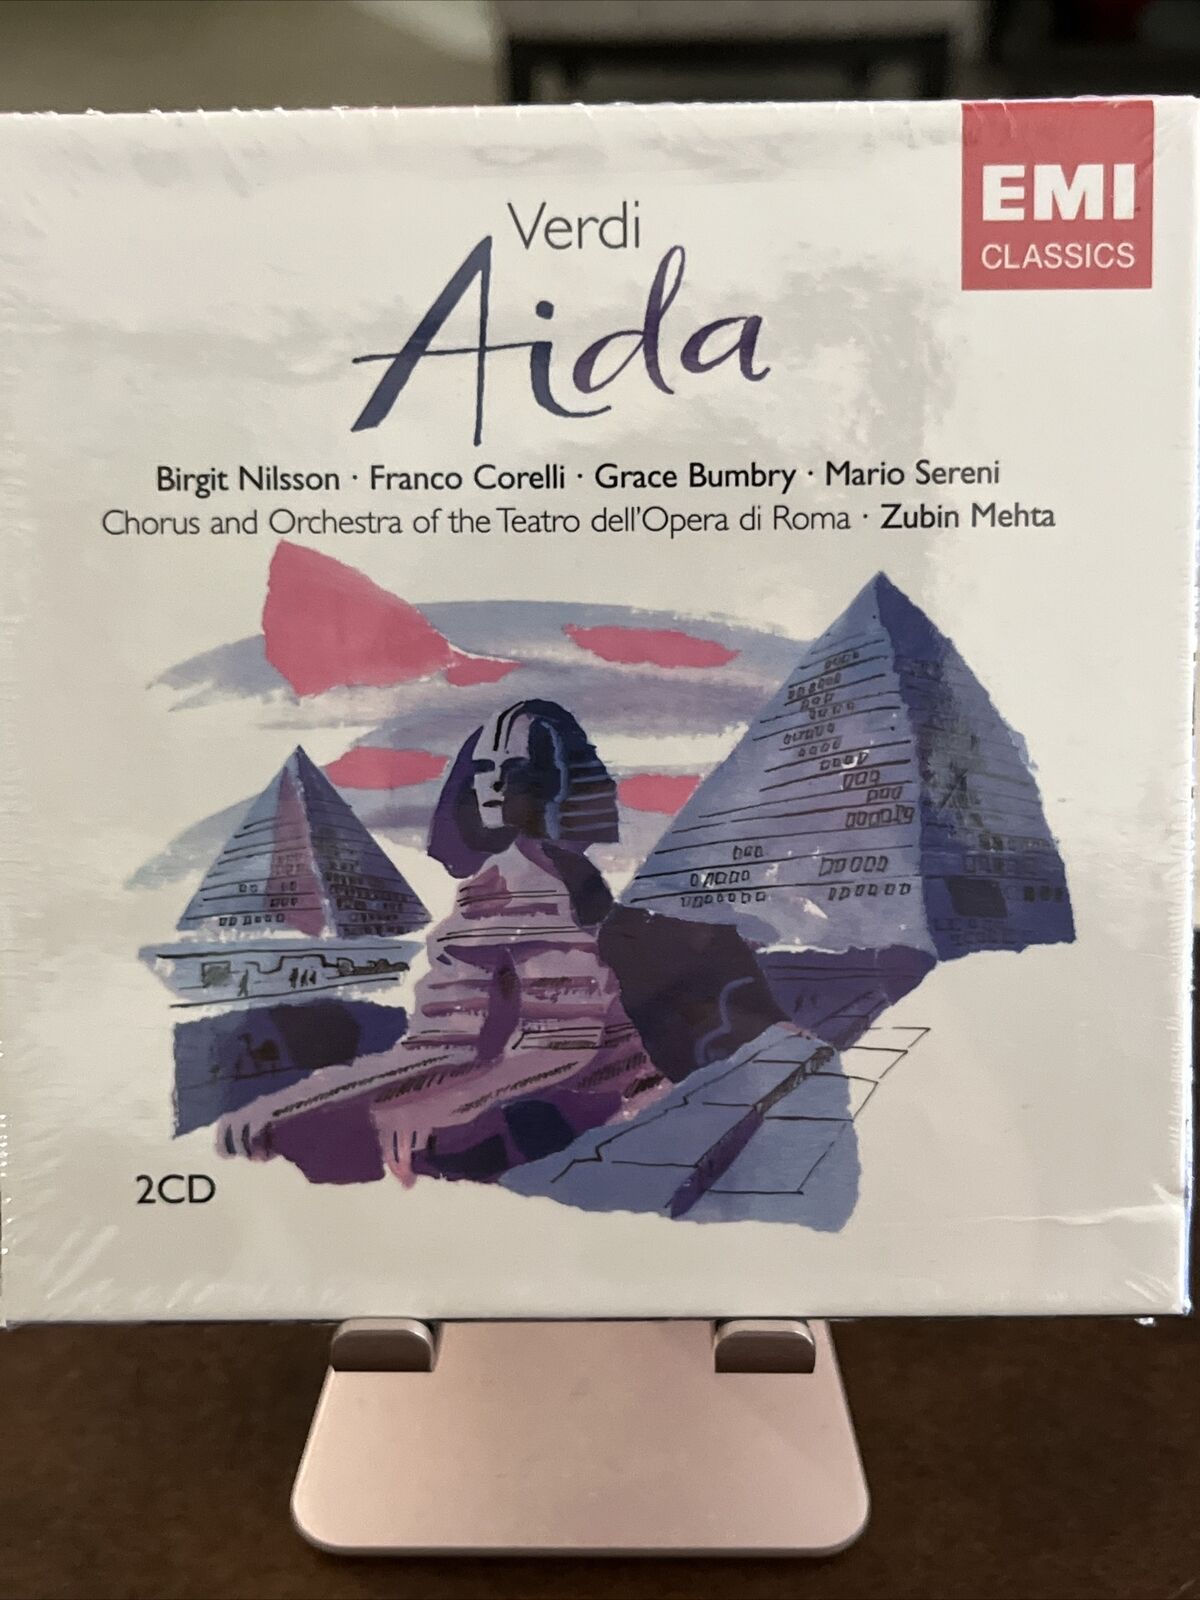 SEALED- Verdi Aida Bonaldo Giaiotti - Aida (Mehta) - Bonaldo Giaiotti CD FCVG